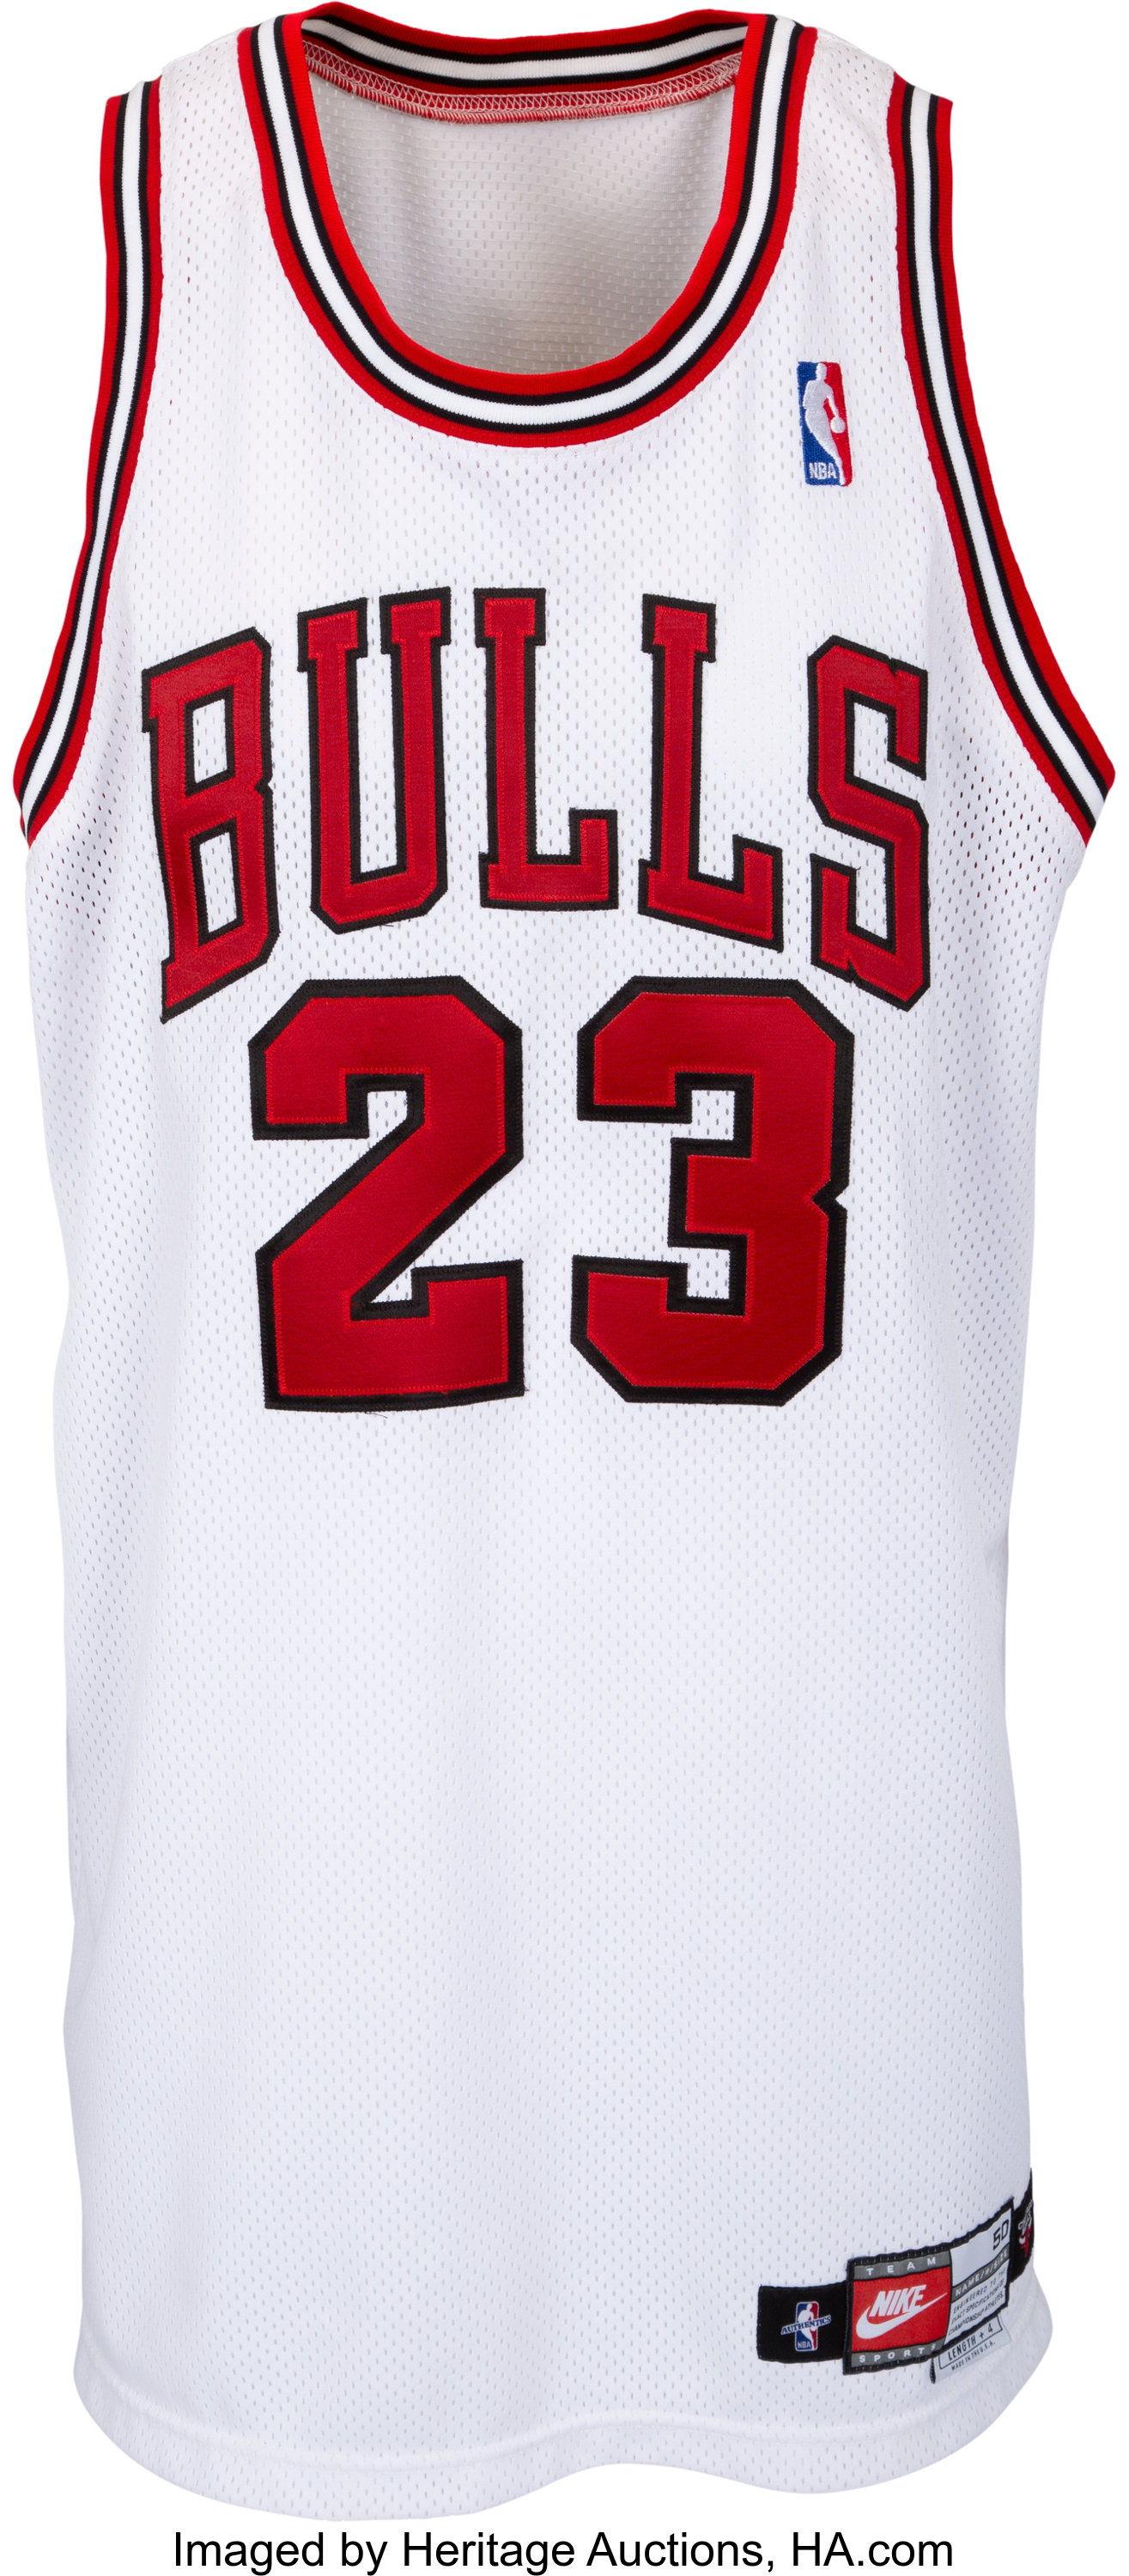 Educación preocupación contacto 1997-98 Michael Jordan Game Worn & Signed Chicago Bulls | Lot #50119 |  Heritage Auctions